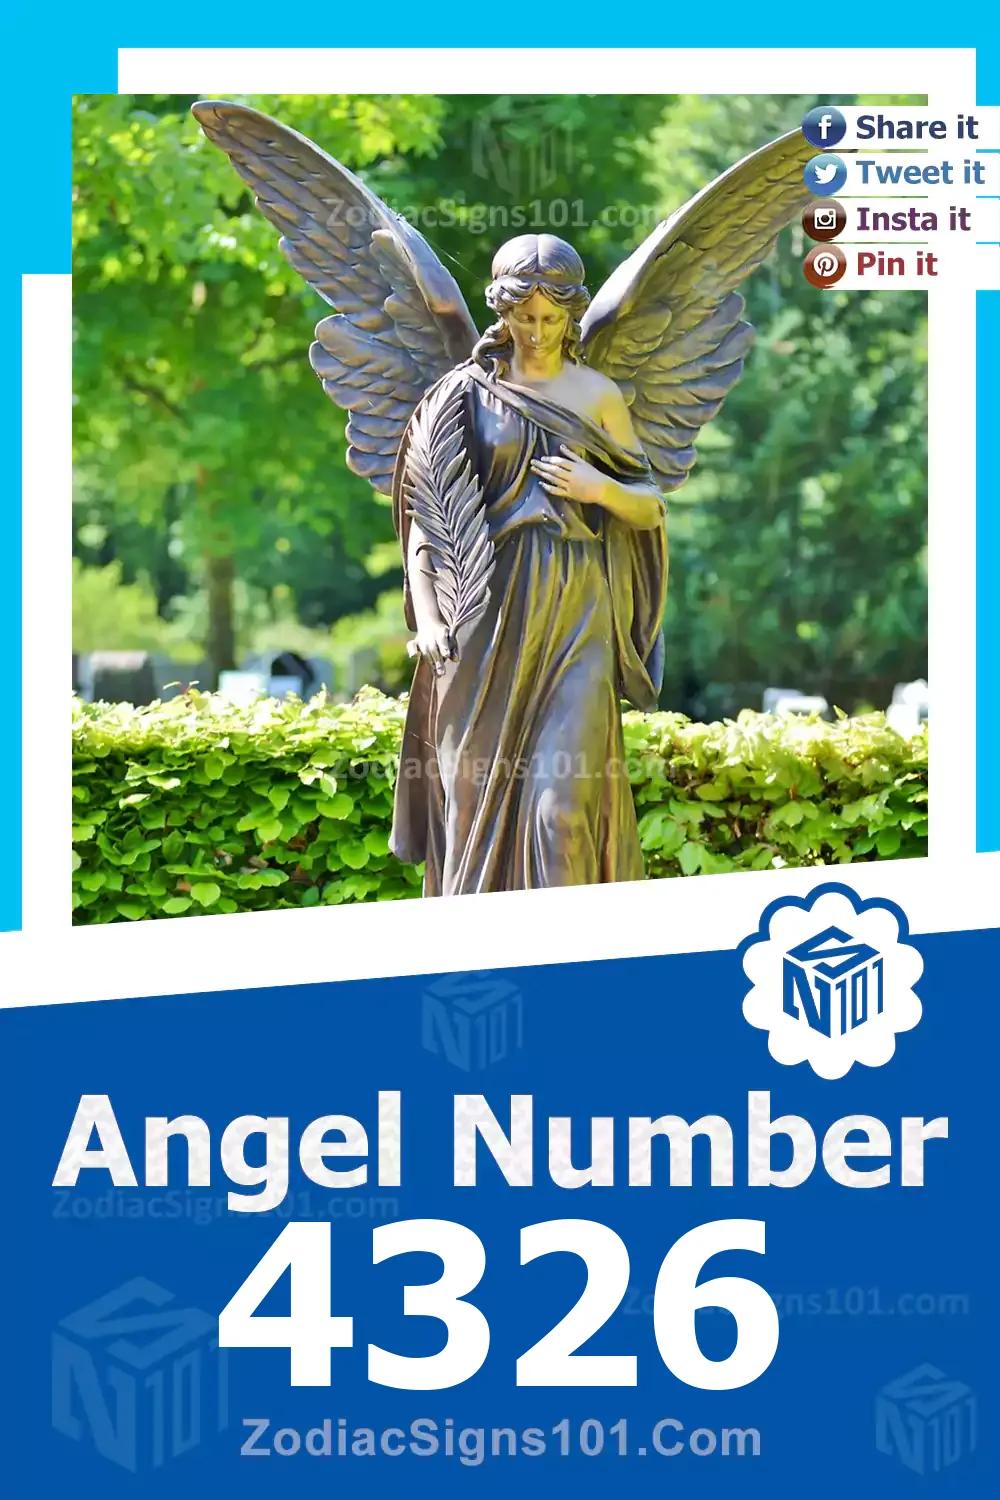 4326-Angel-Number-Meaning.jpg